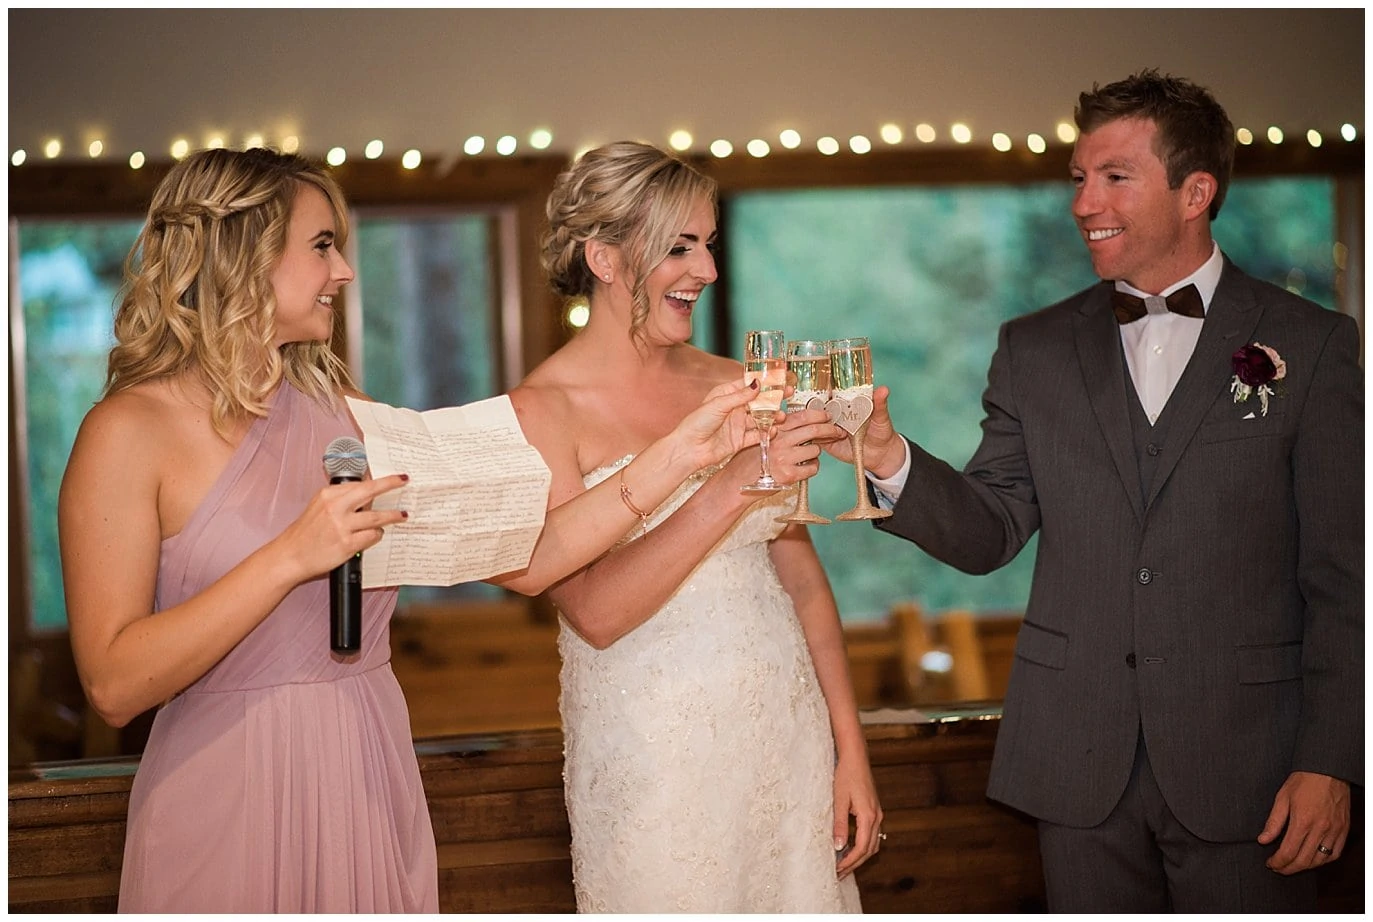 toasts at wedding reception photo